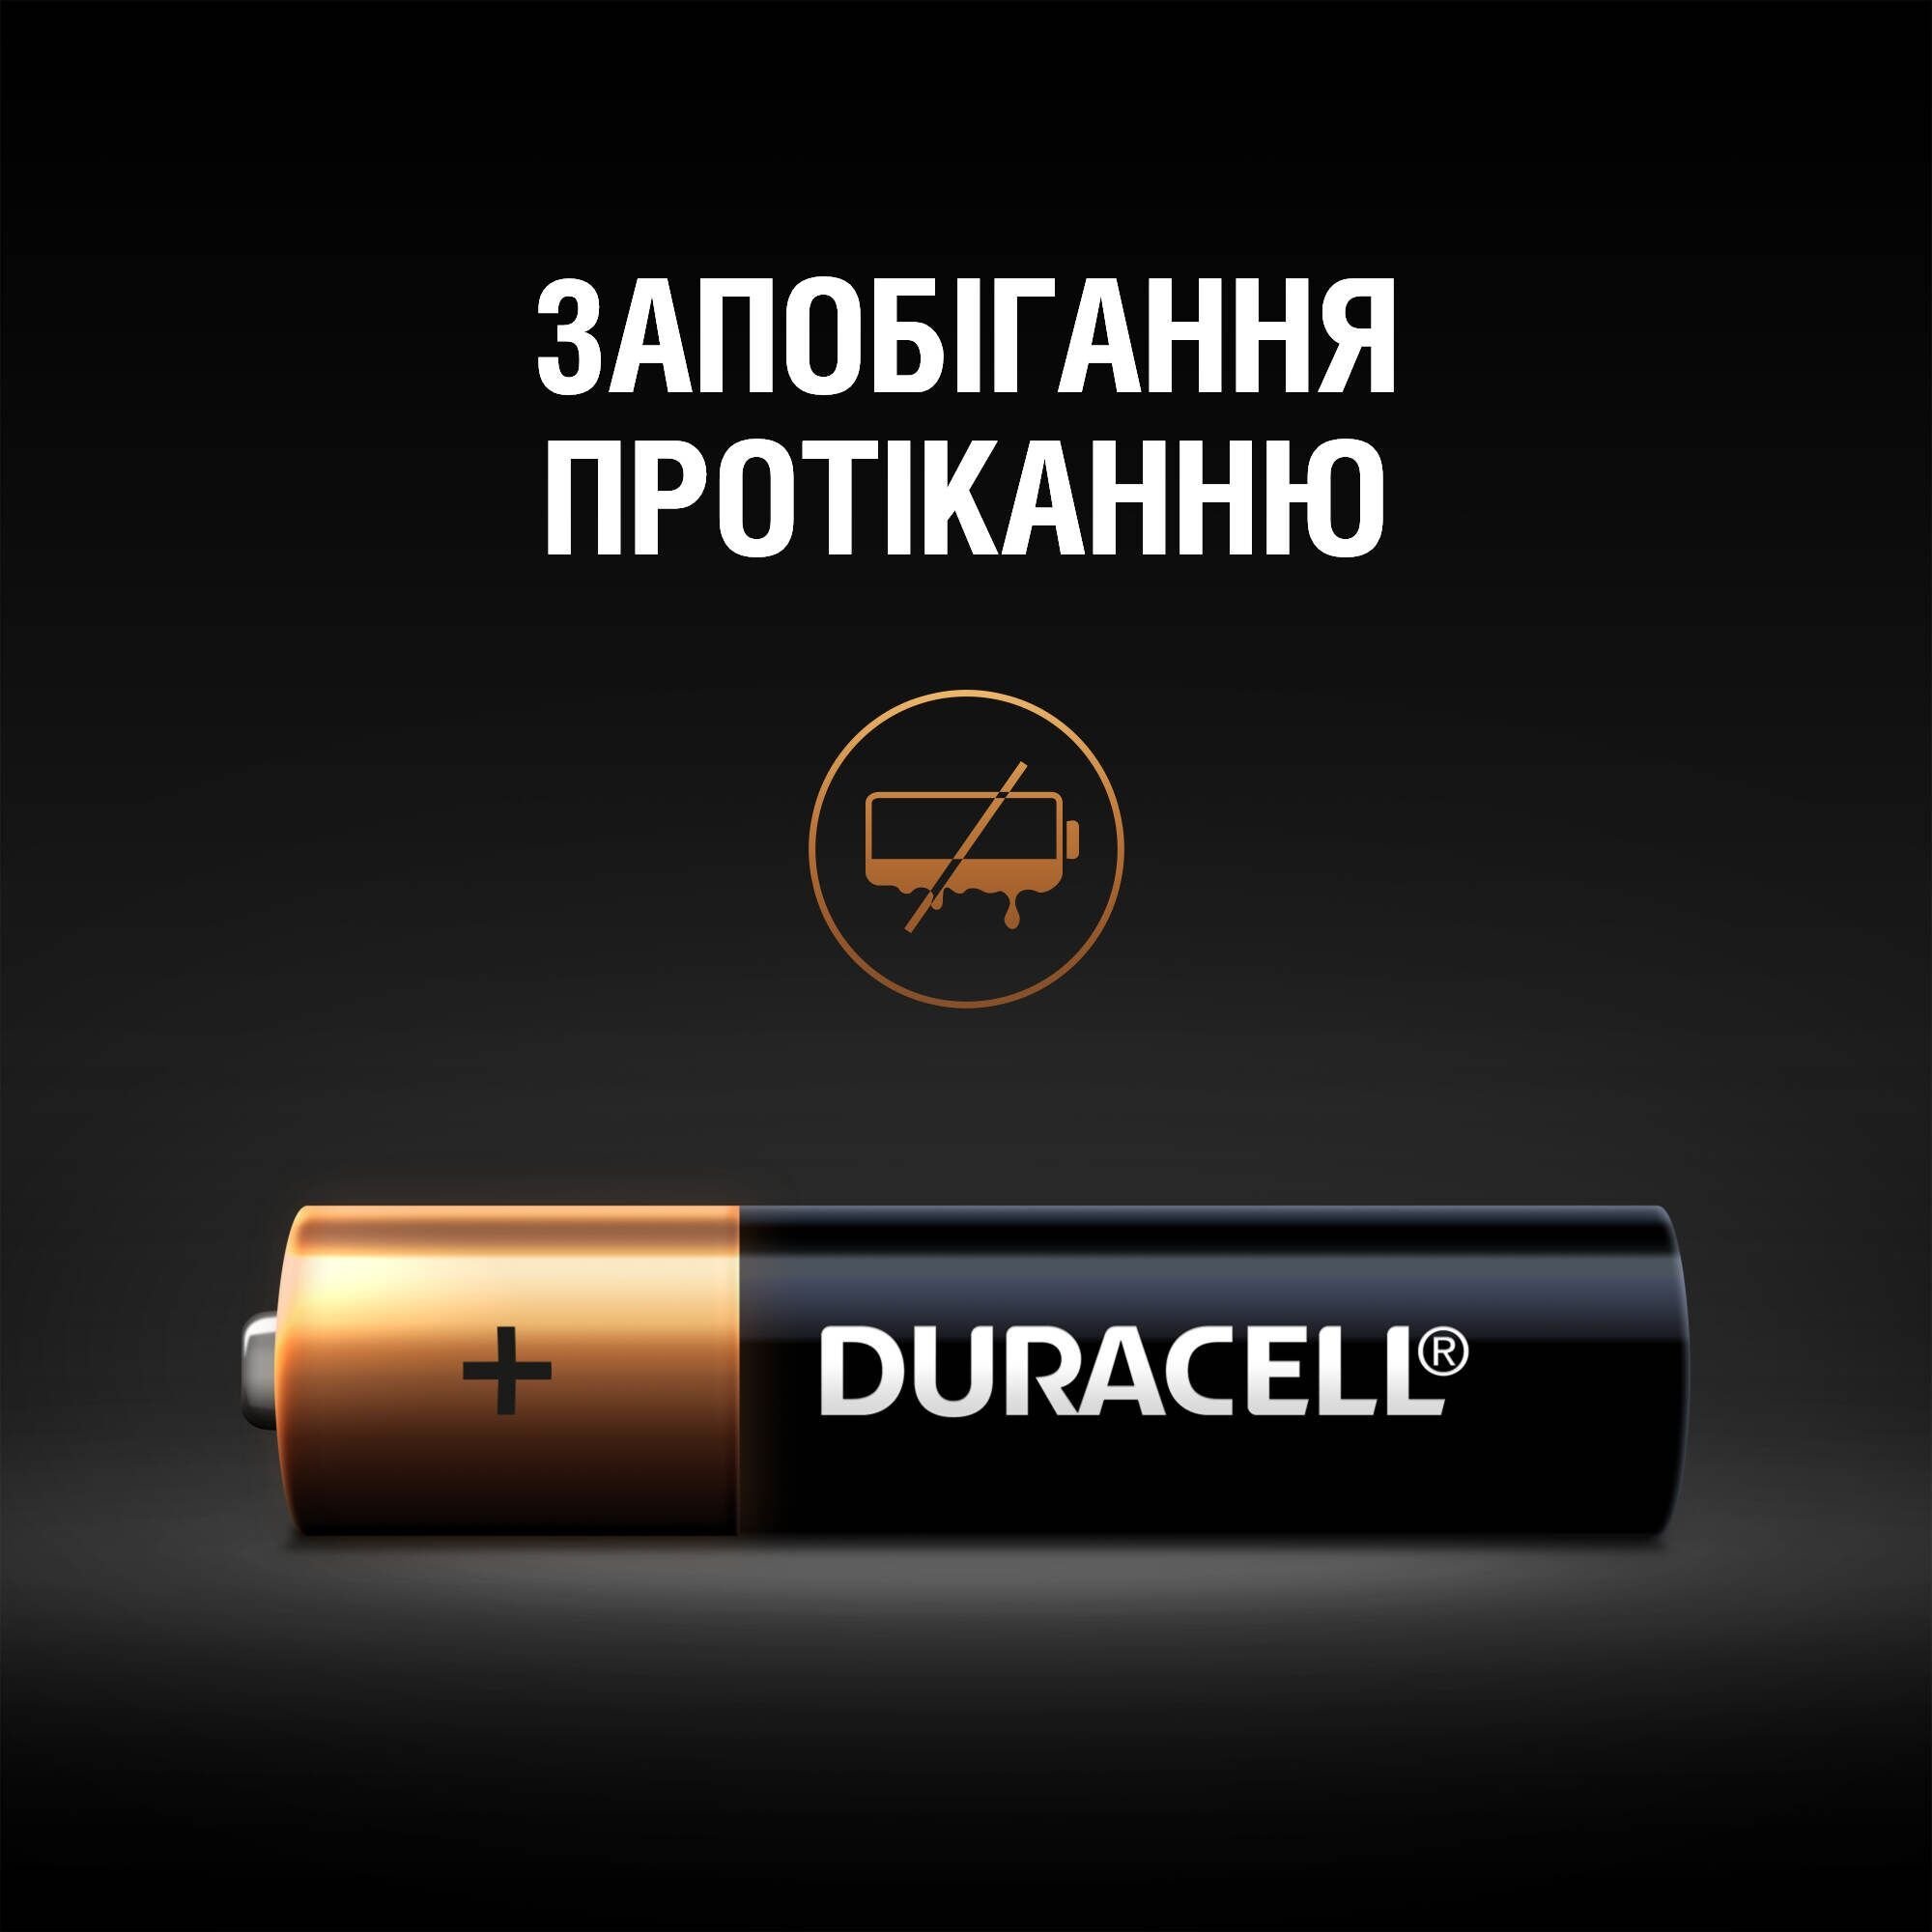 Щелочные батарейки мизинчиковые Duracell 1.5 V AAA LR03/MN2400, 18 шт. (737056) - фото 5